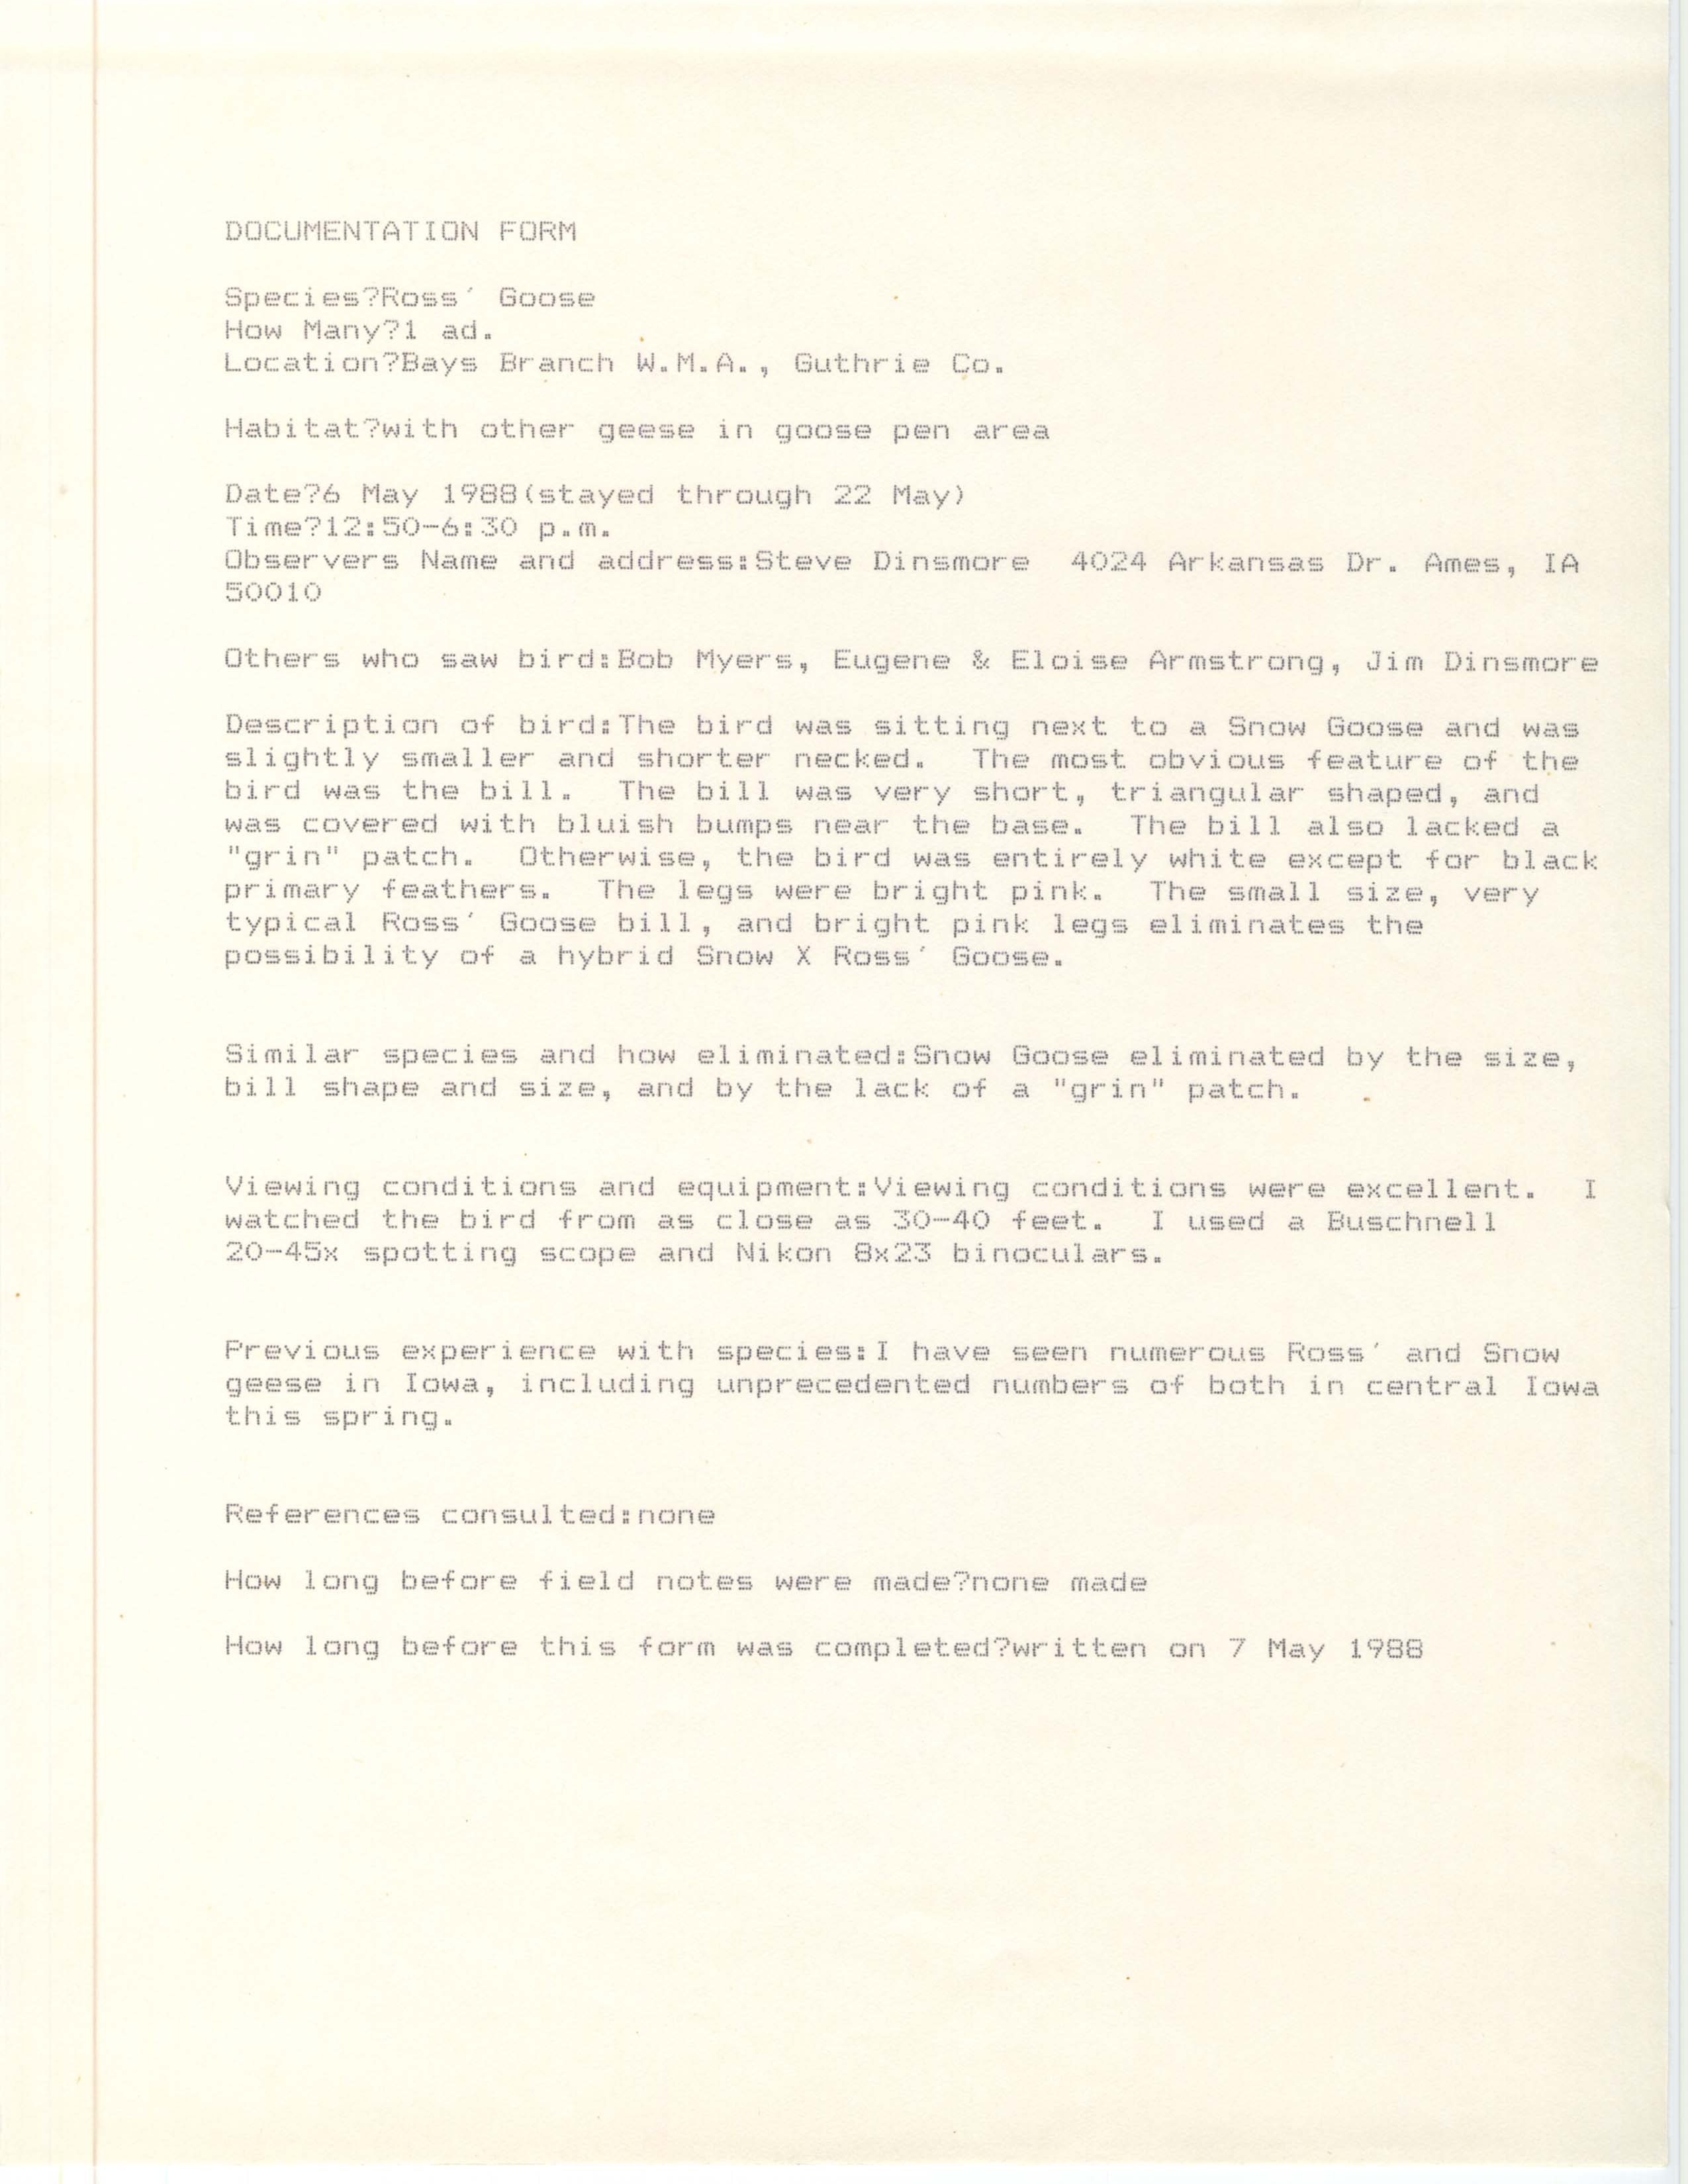 Rare bird documentation form for Ross' Goose at Bays Branch Wildlife Management Area, 1988